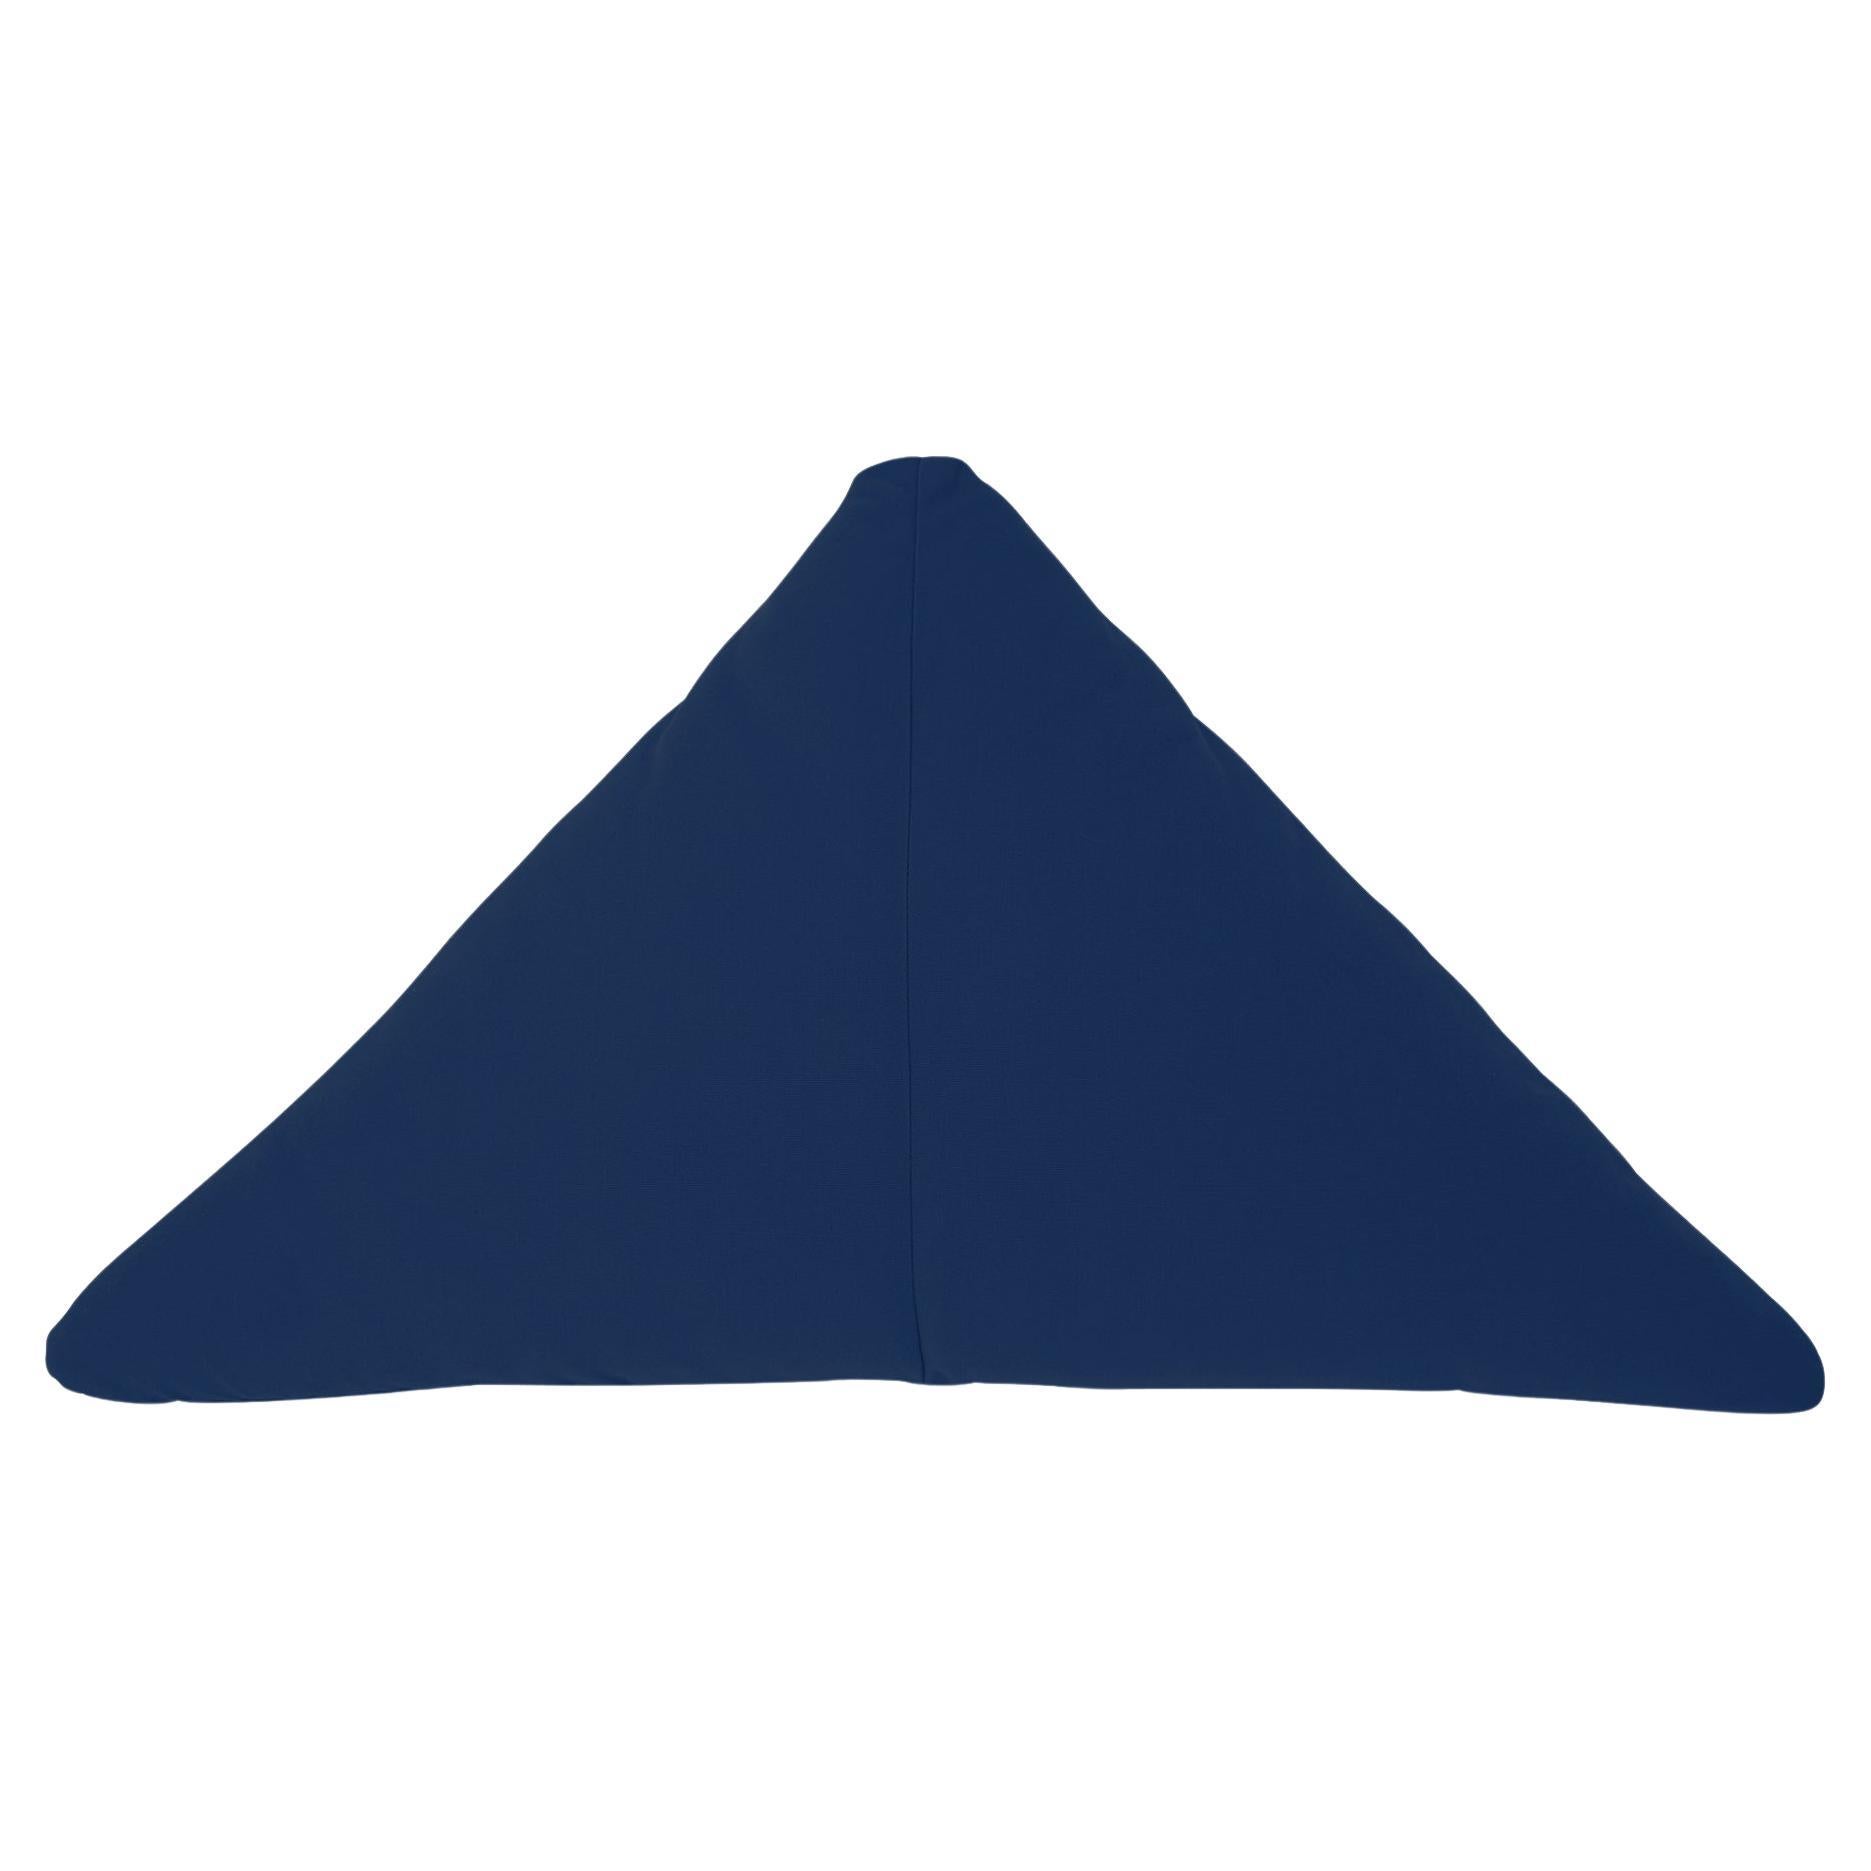 Bend Goods - Triangle Throw Pillow in Navy Blue Sunbrella